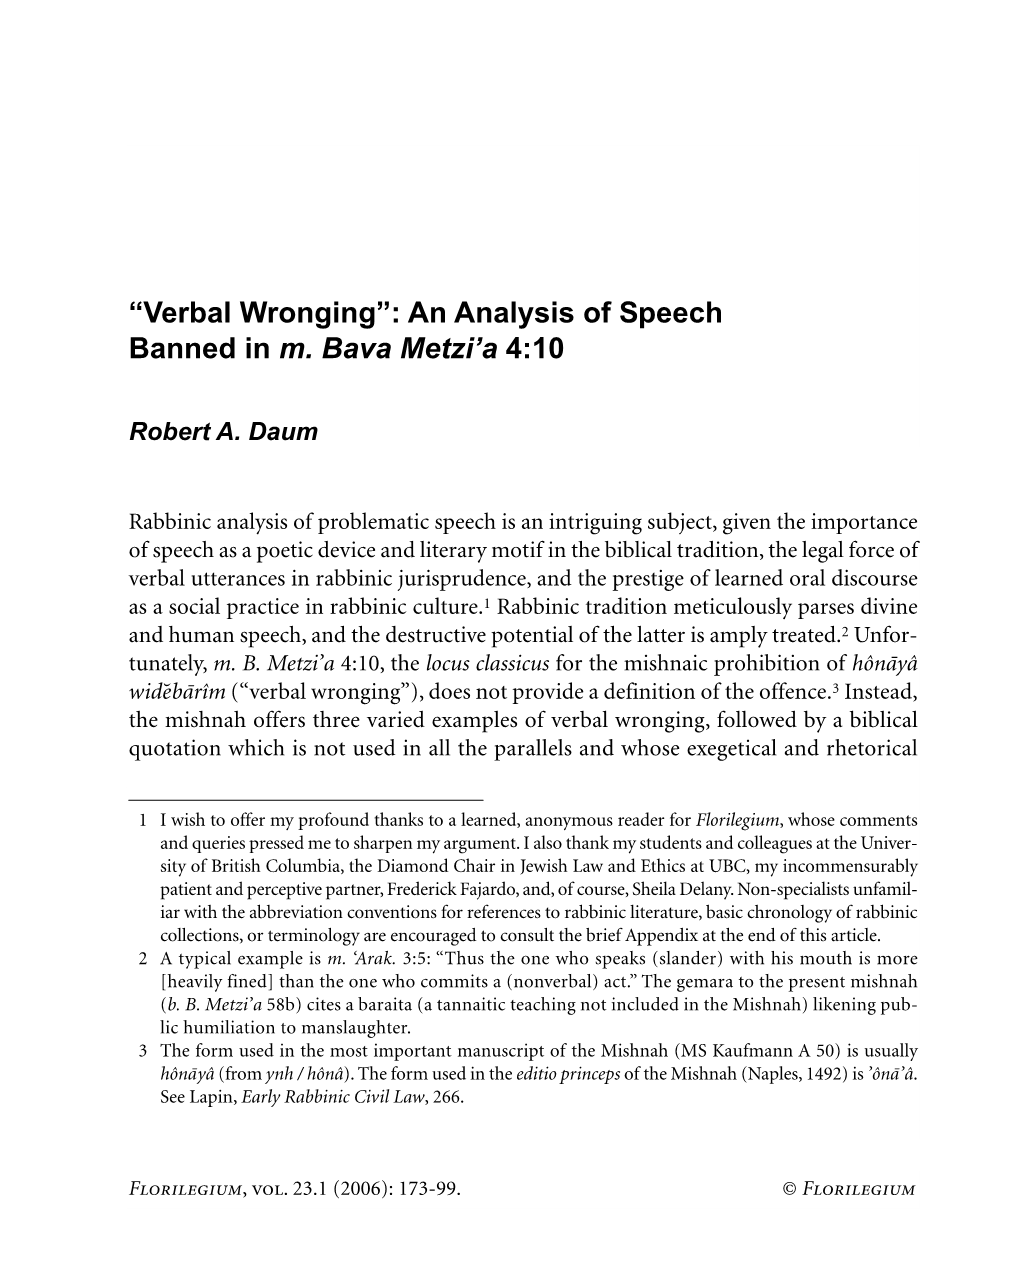 “Verbal Wronging”: an Analysis of Speech Banned in M. Bava Metzi'a